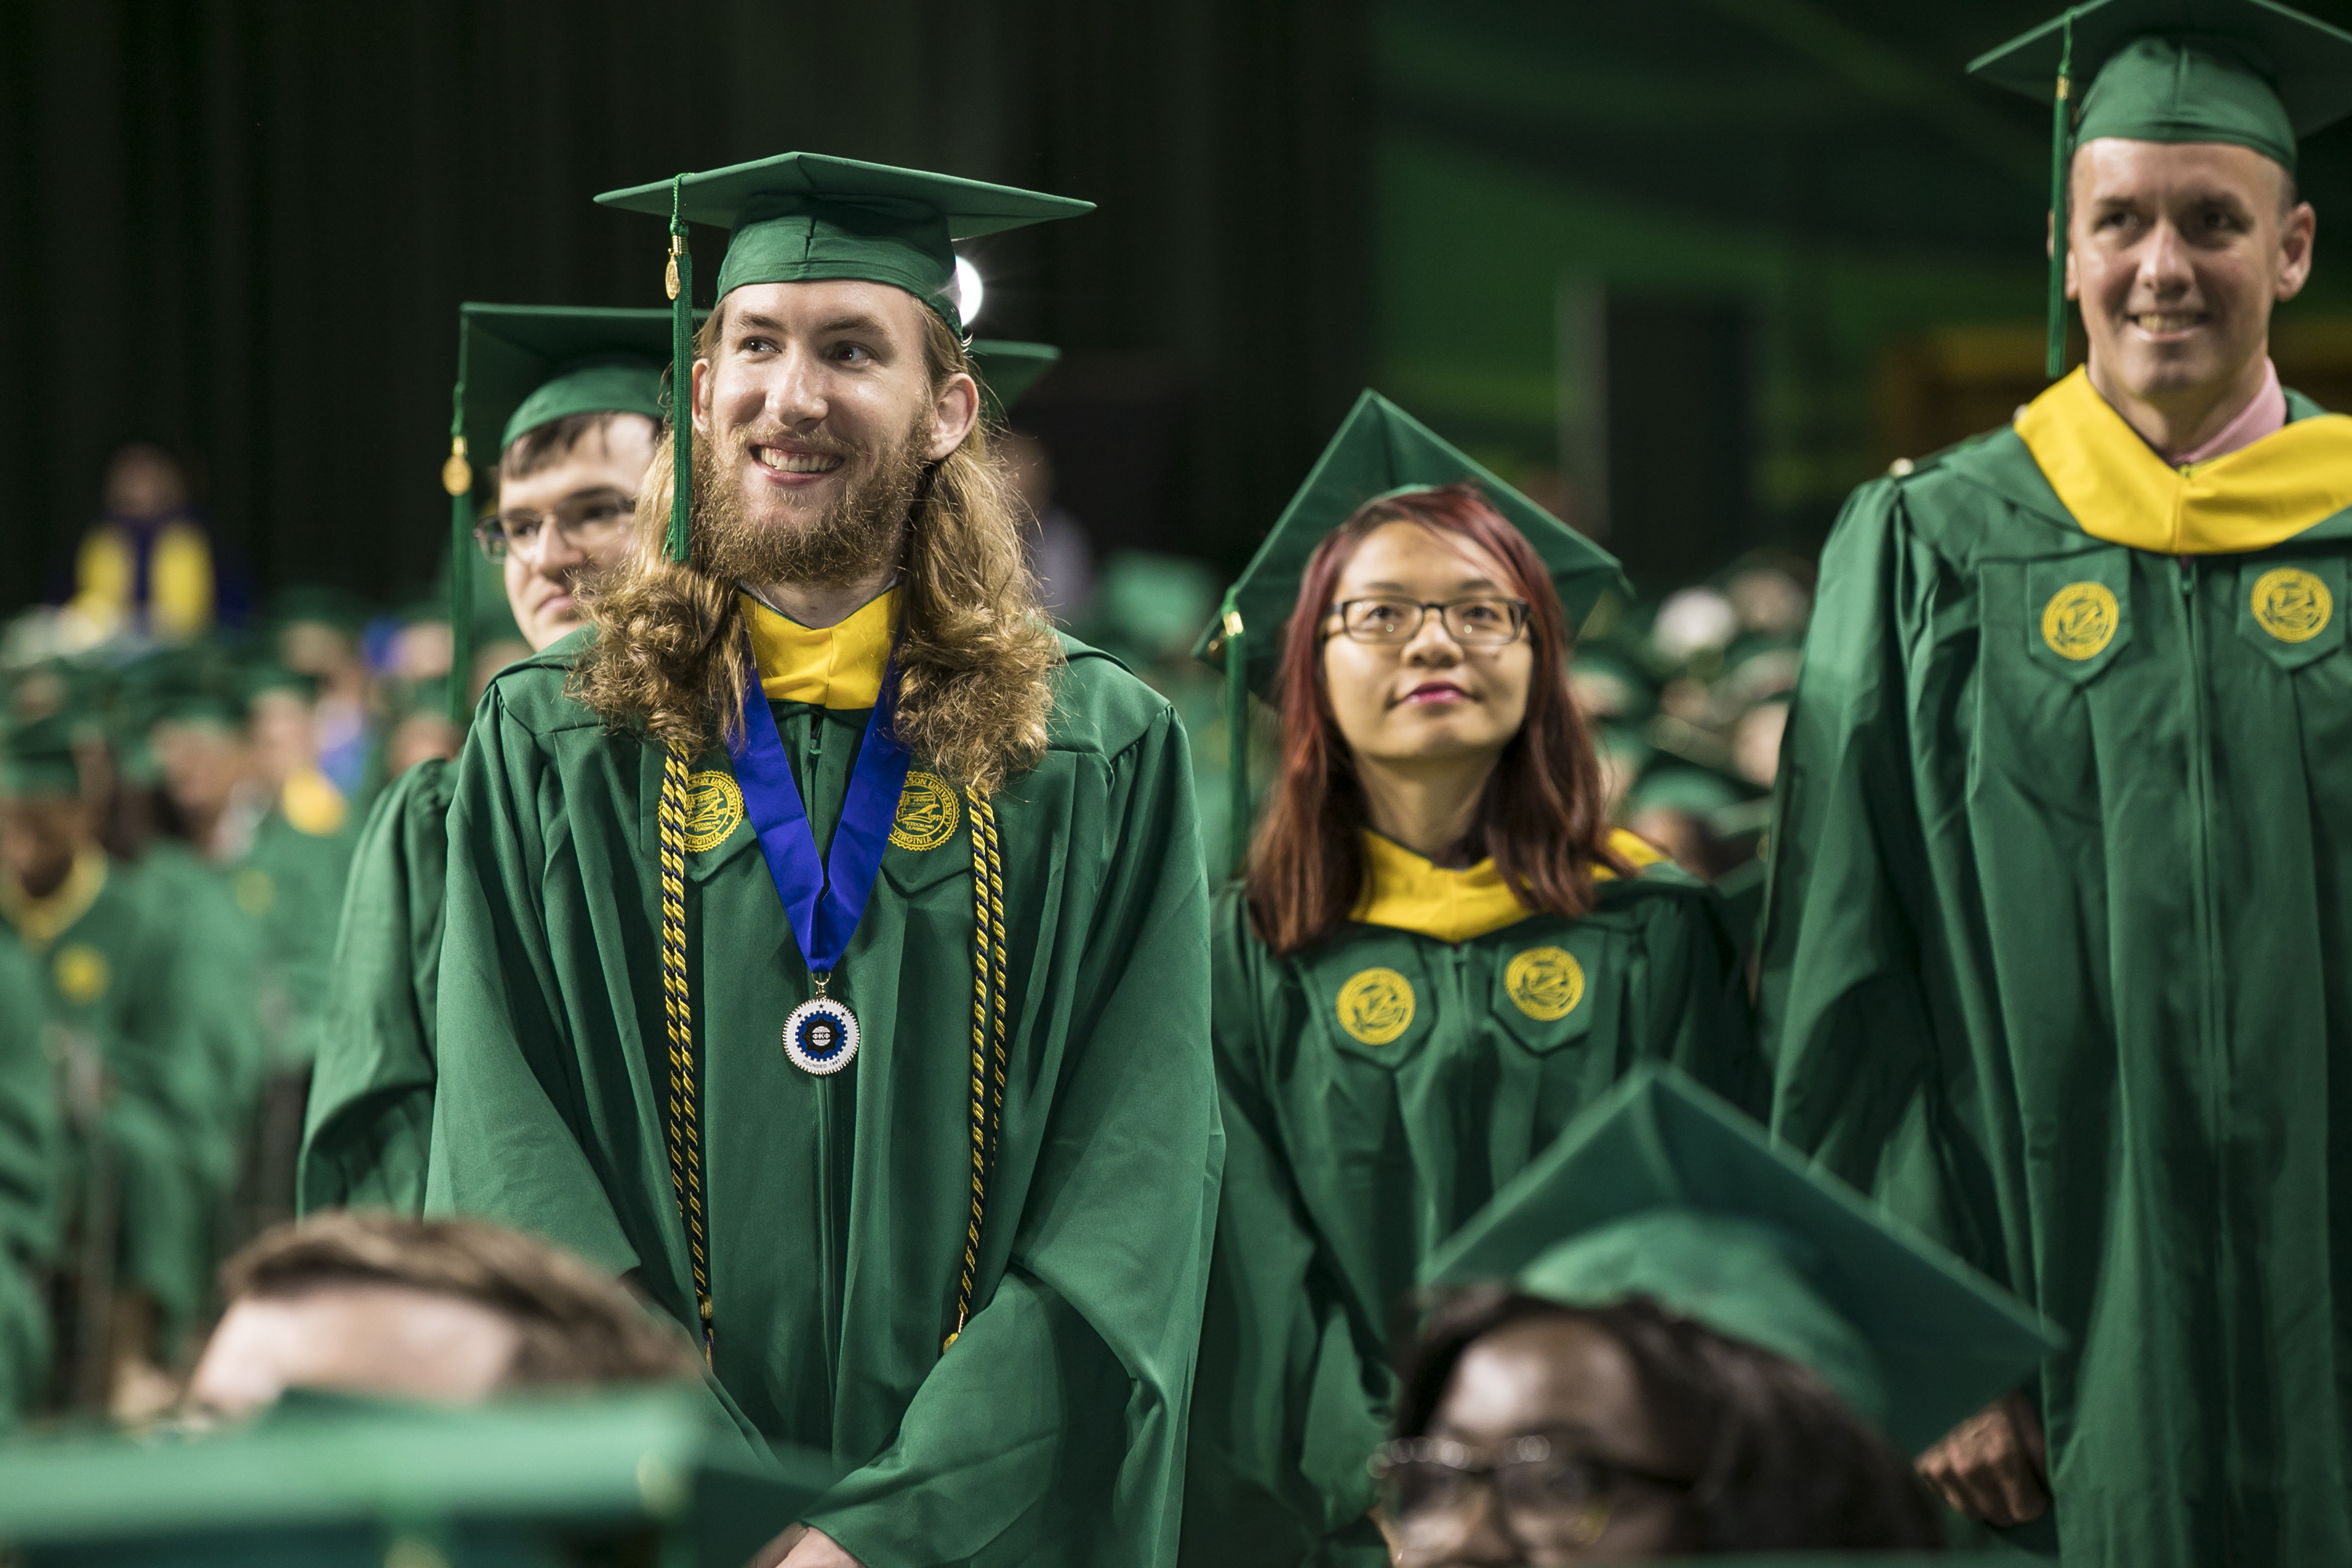 Commencement 2019: Celebrating Mason's graduates